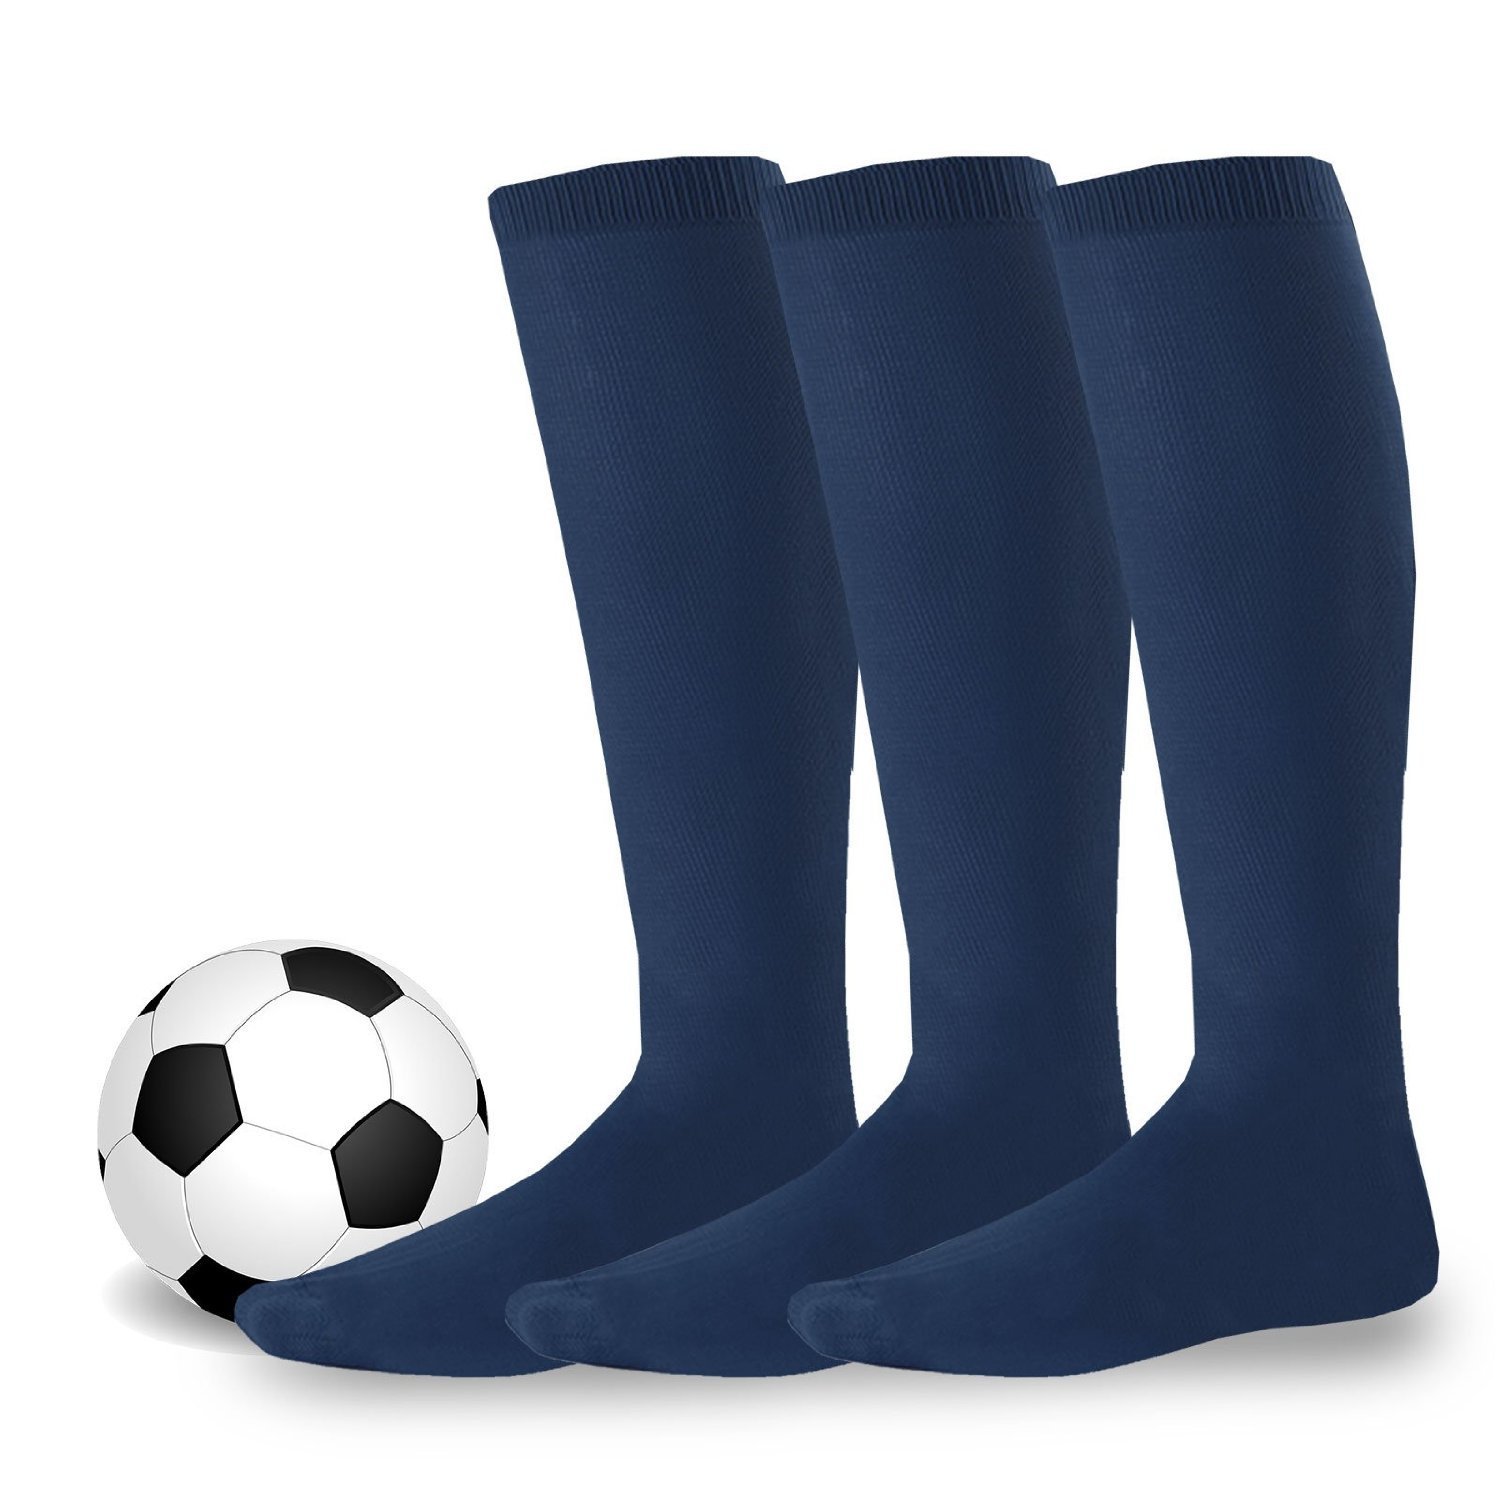 Unisex Kids Youth Sock Size 5-7 Soccer Team Sports Cushion Acrylic Knee High Socks 3 Pair Navy - image 1 of 2